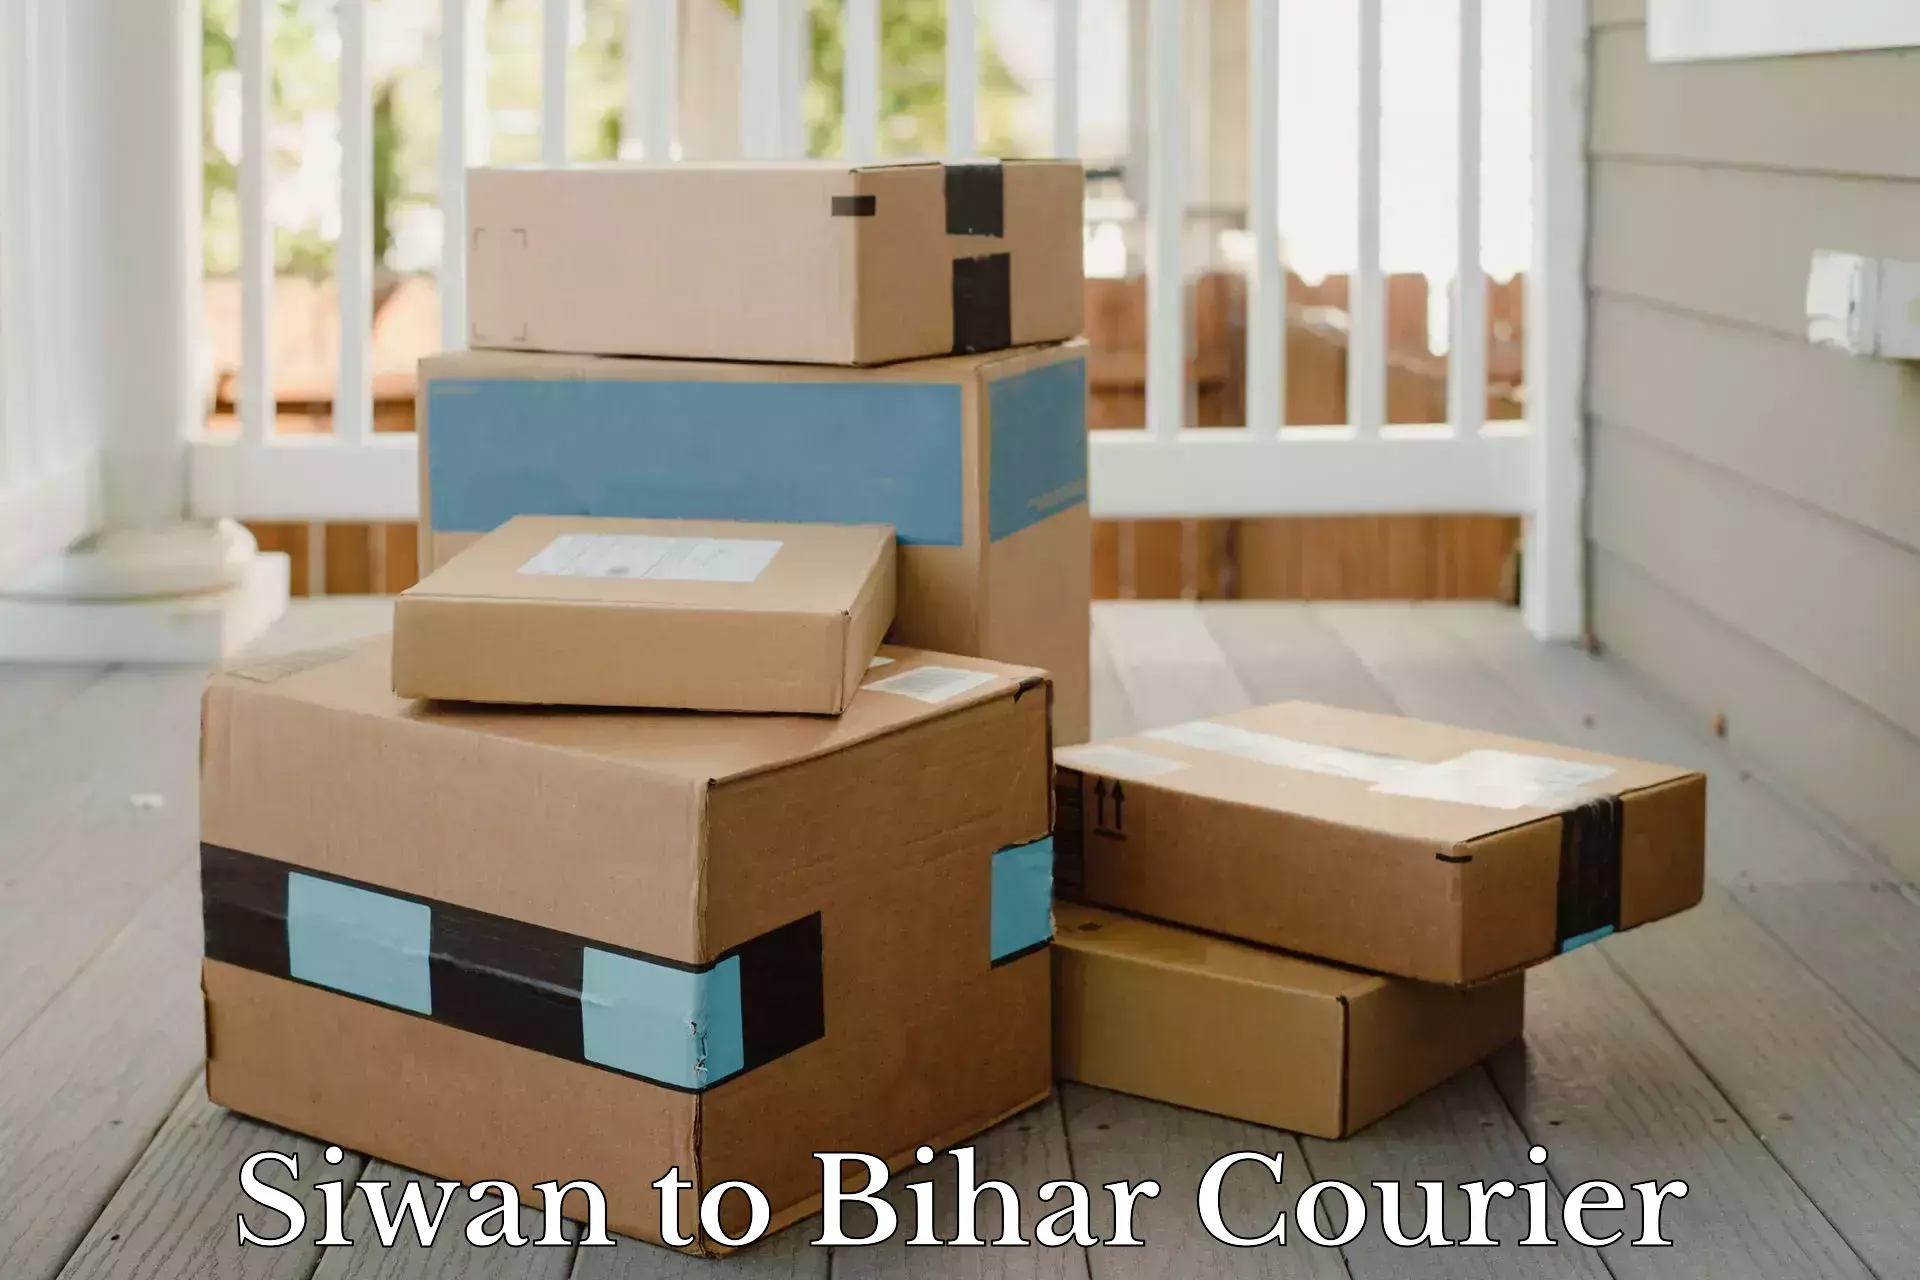 Courier service comparison Siwan to Minapur